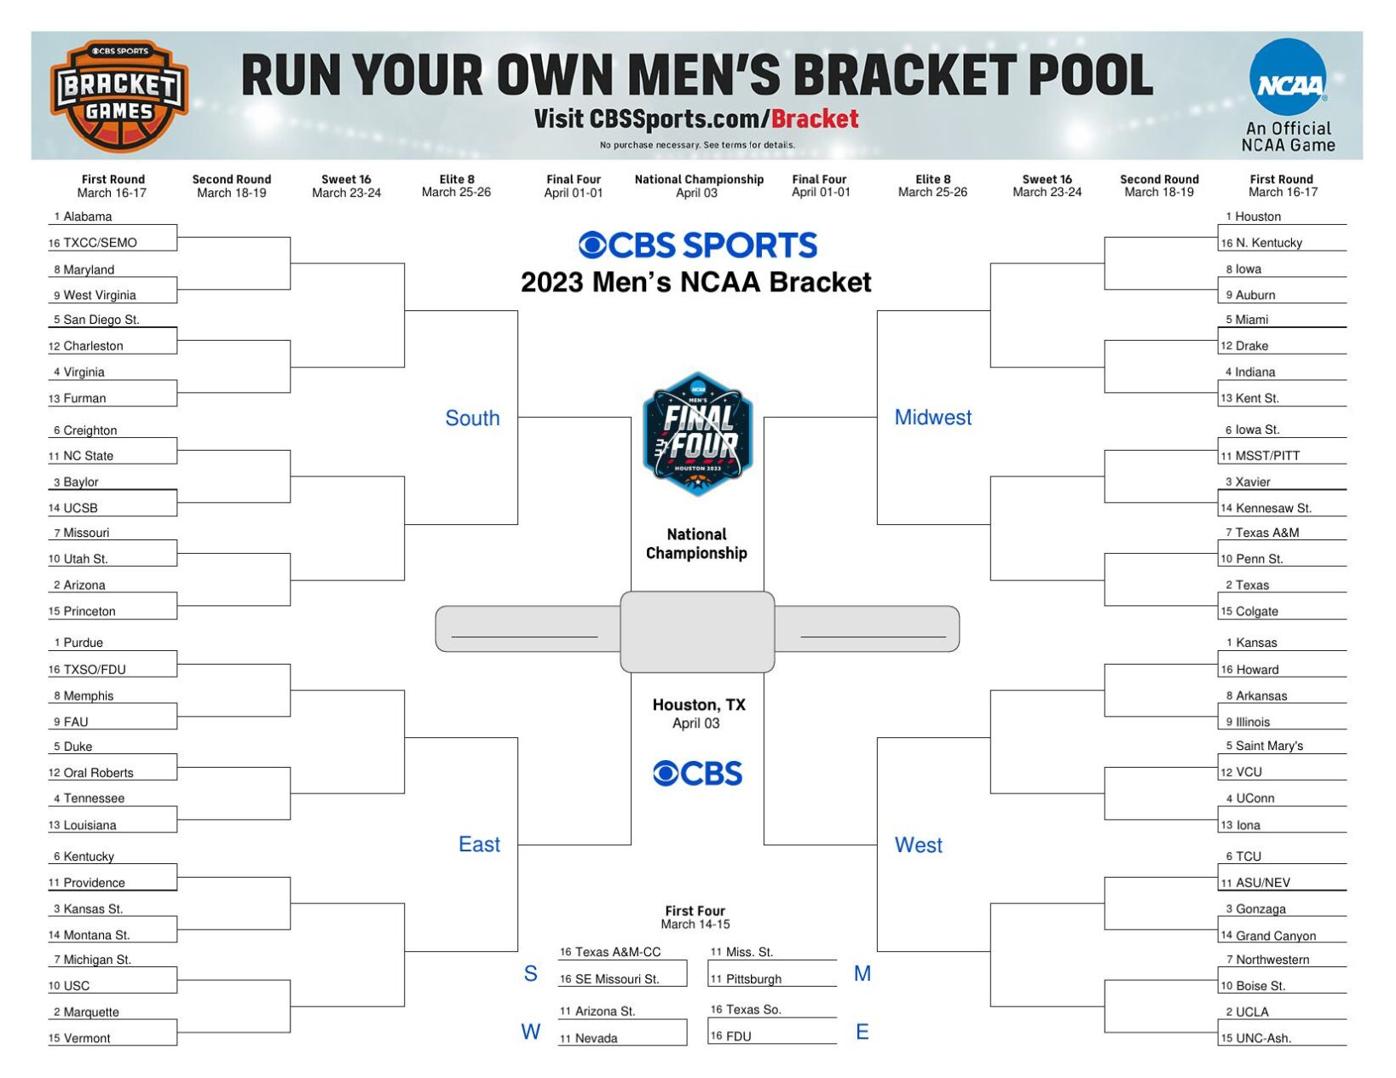 CBS Sports men's NCAA tournament bracket